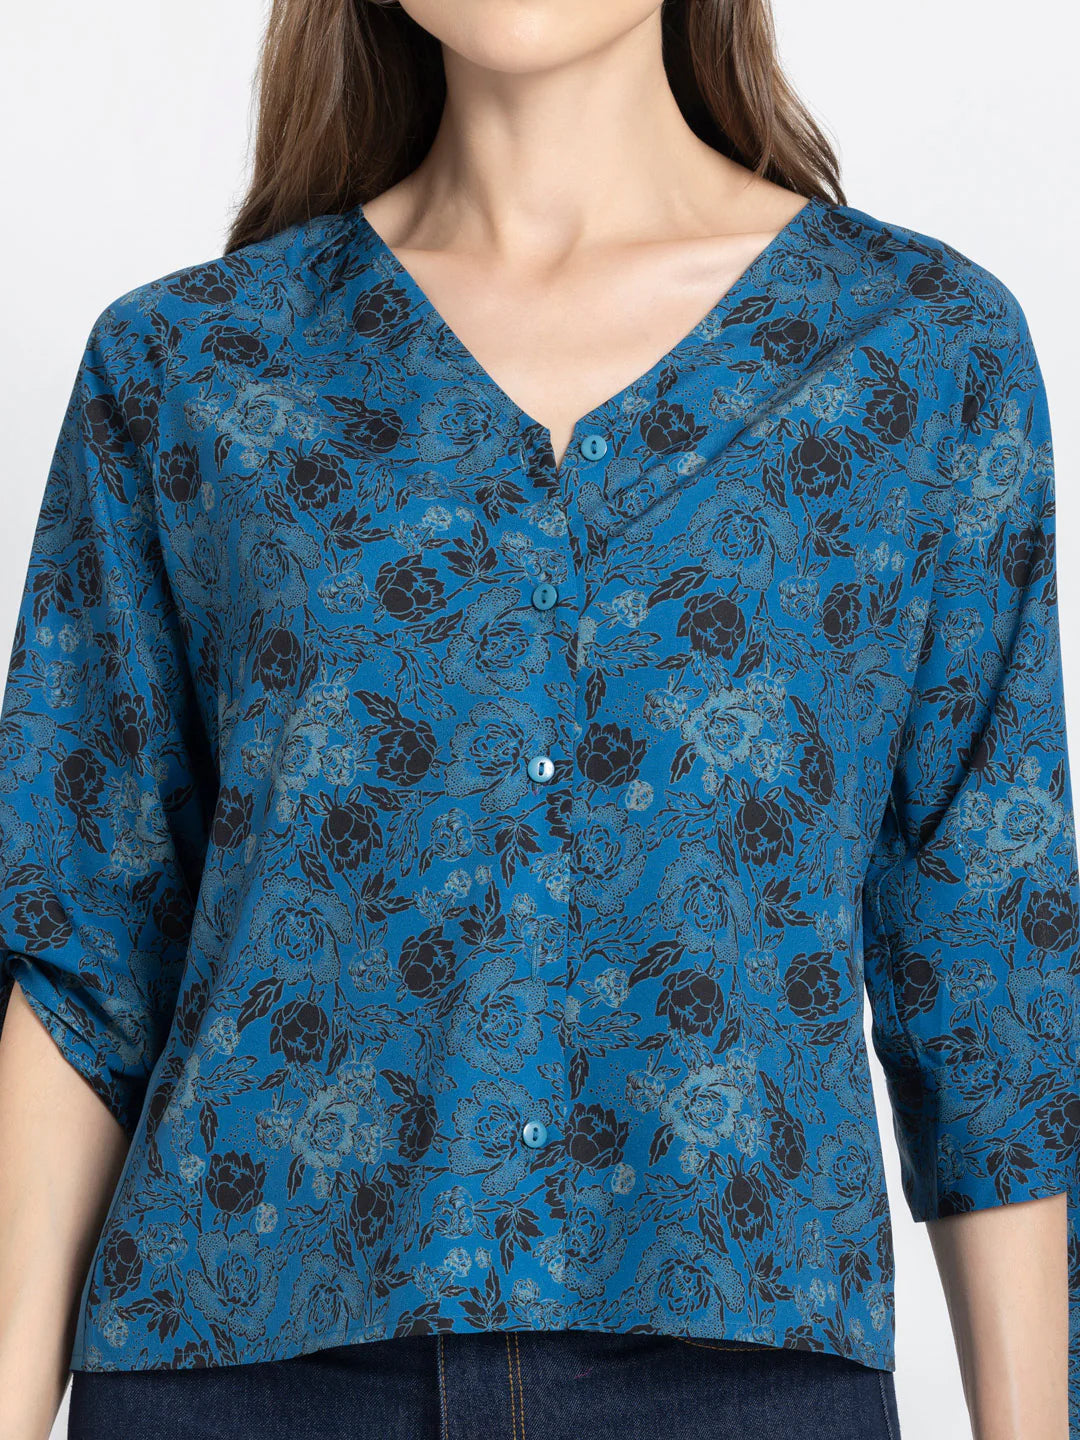 Blue Floral Print Shirt for Women | Enchanting Blooms Floral Print Shirt